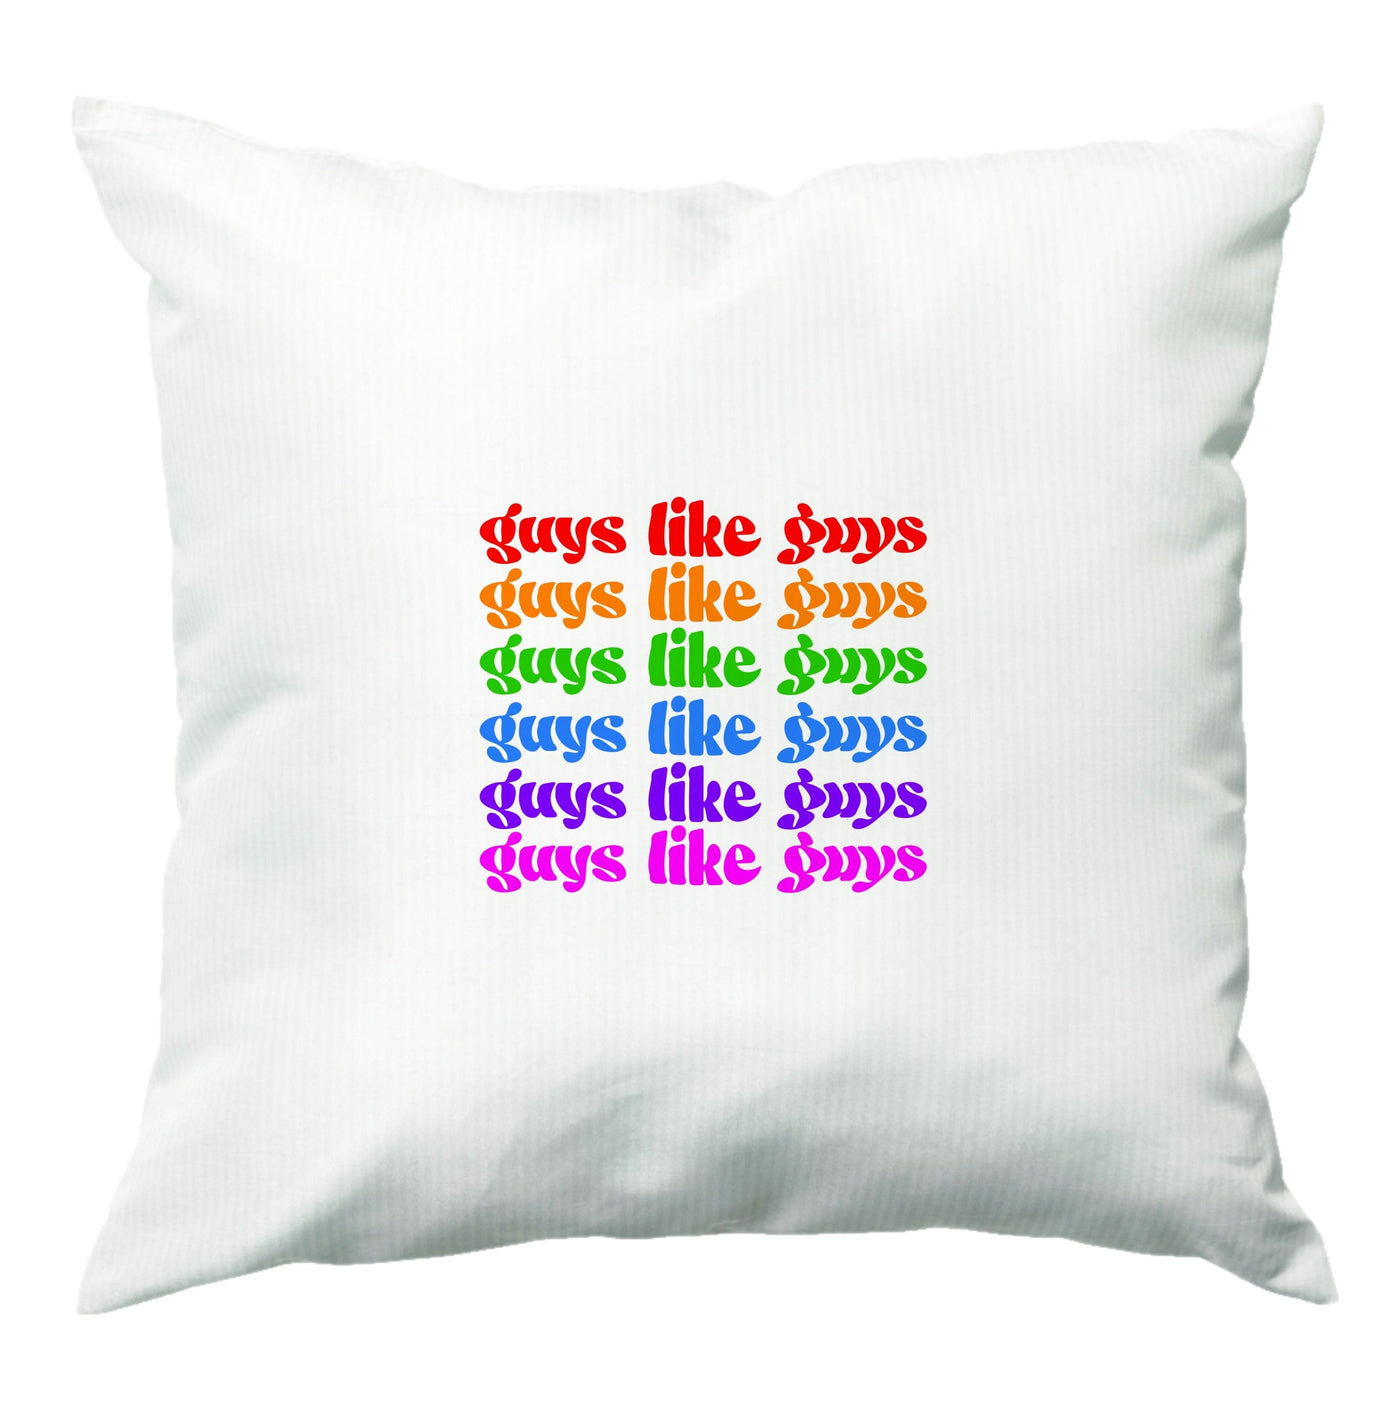 Guys like guys - Pride Cushion